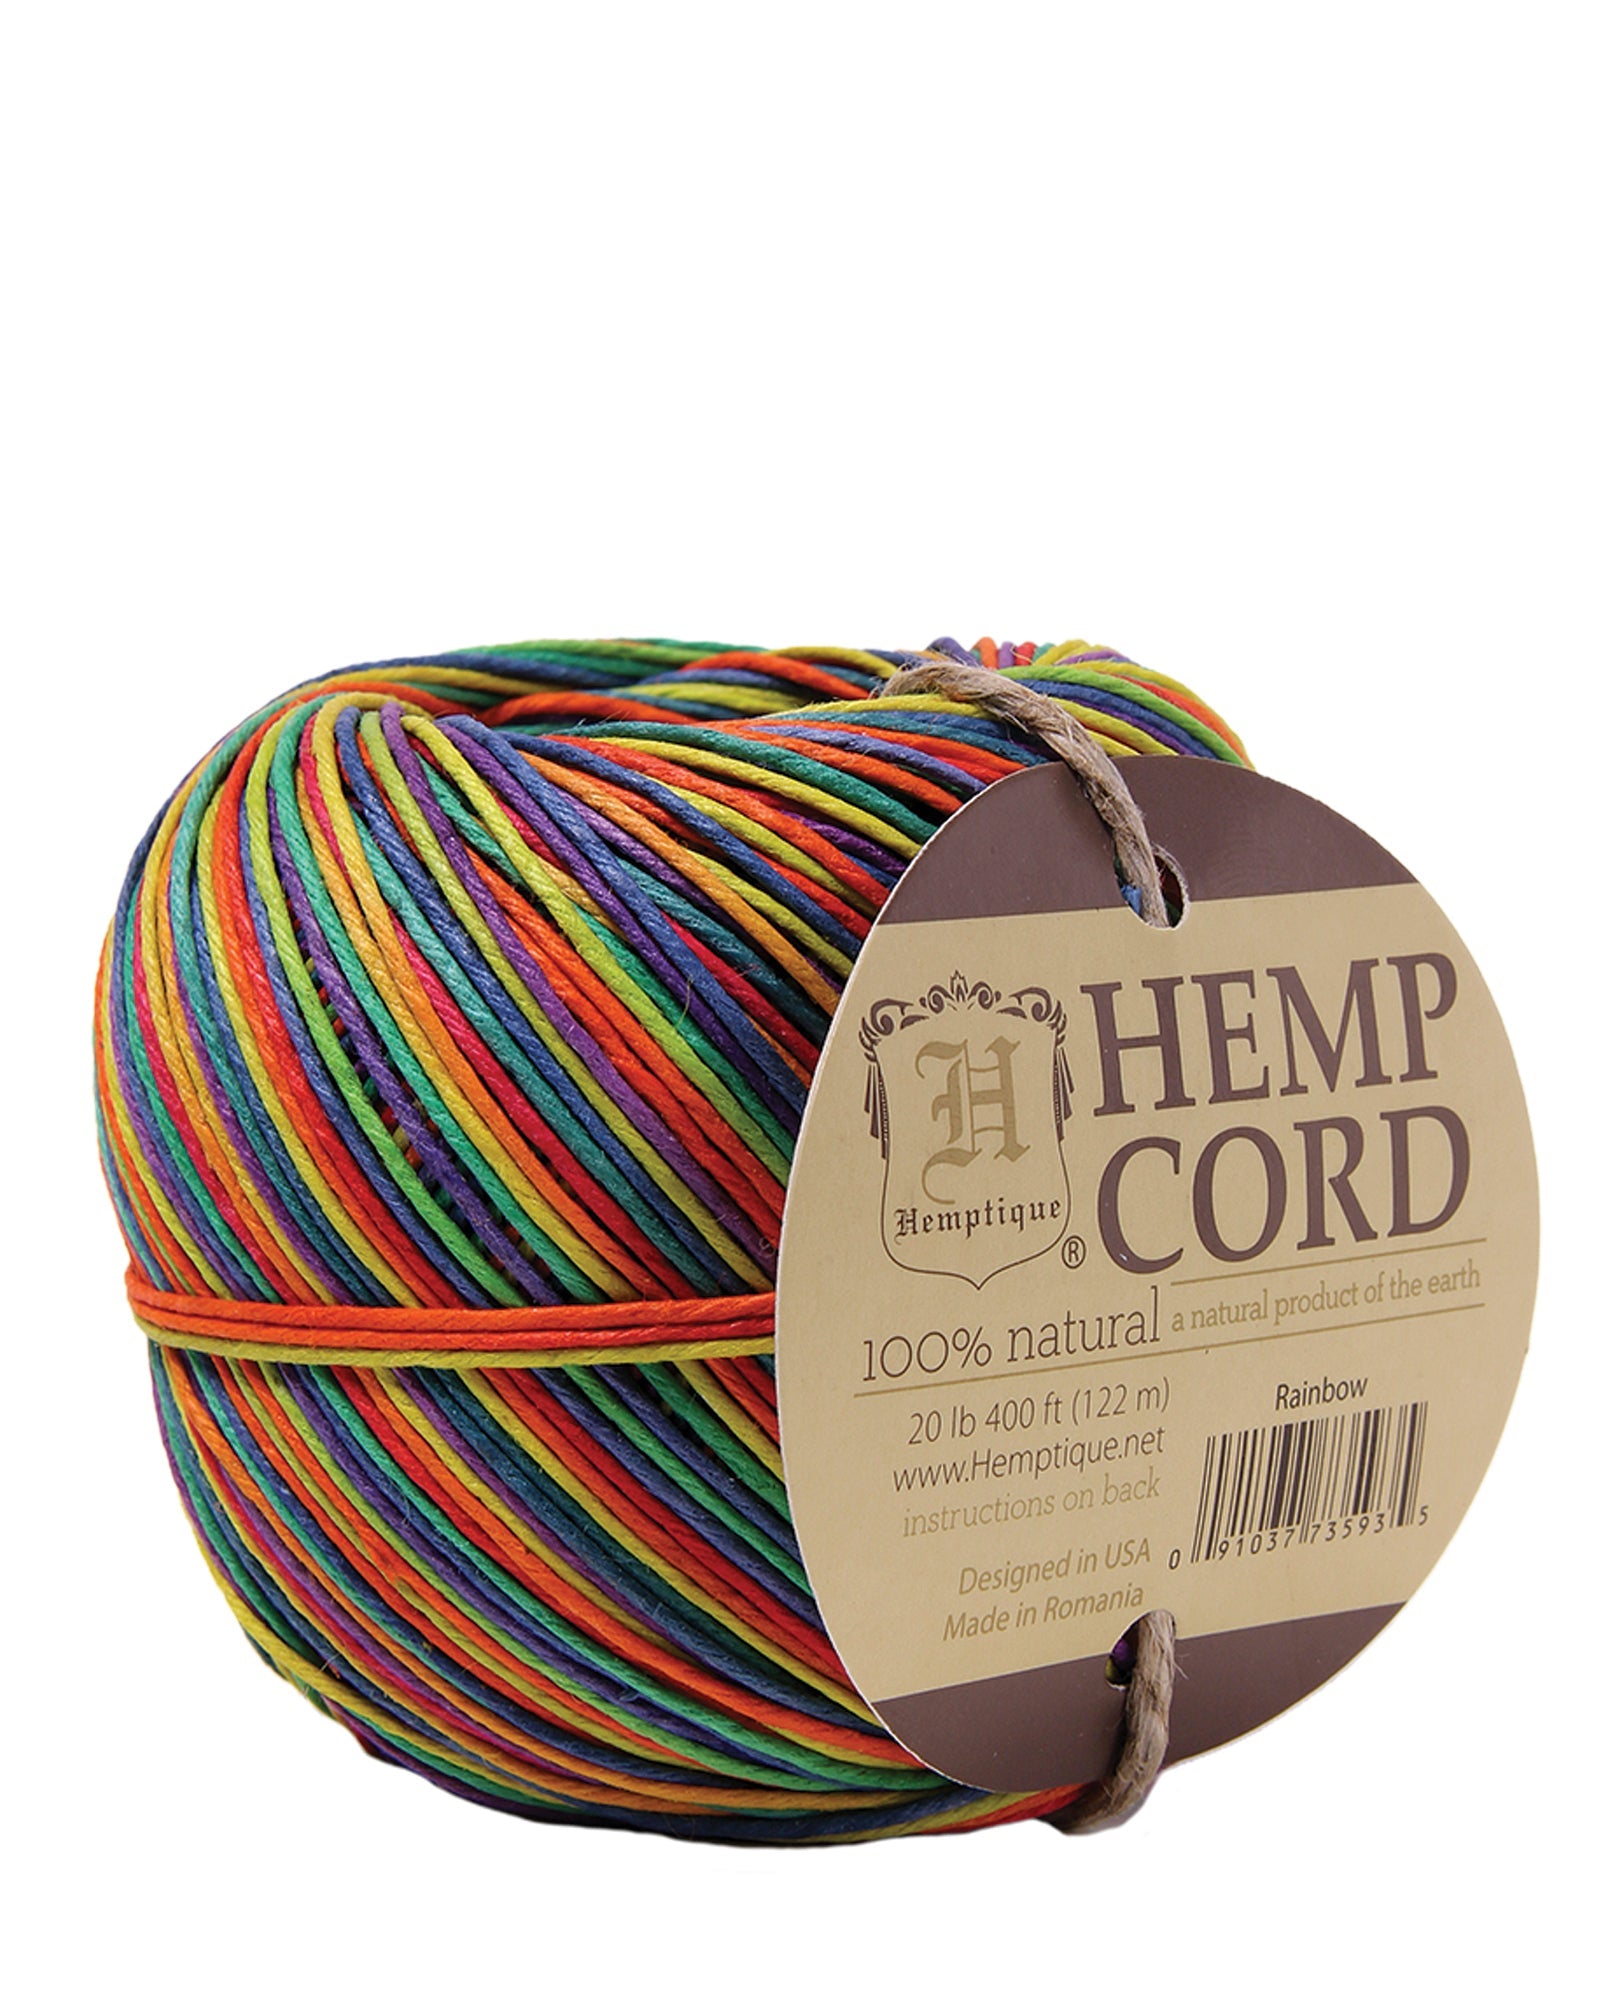 Hemptique Hemp Cord Ball - Rainbow